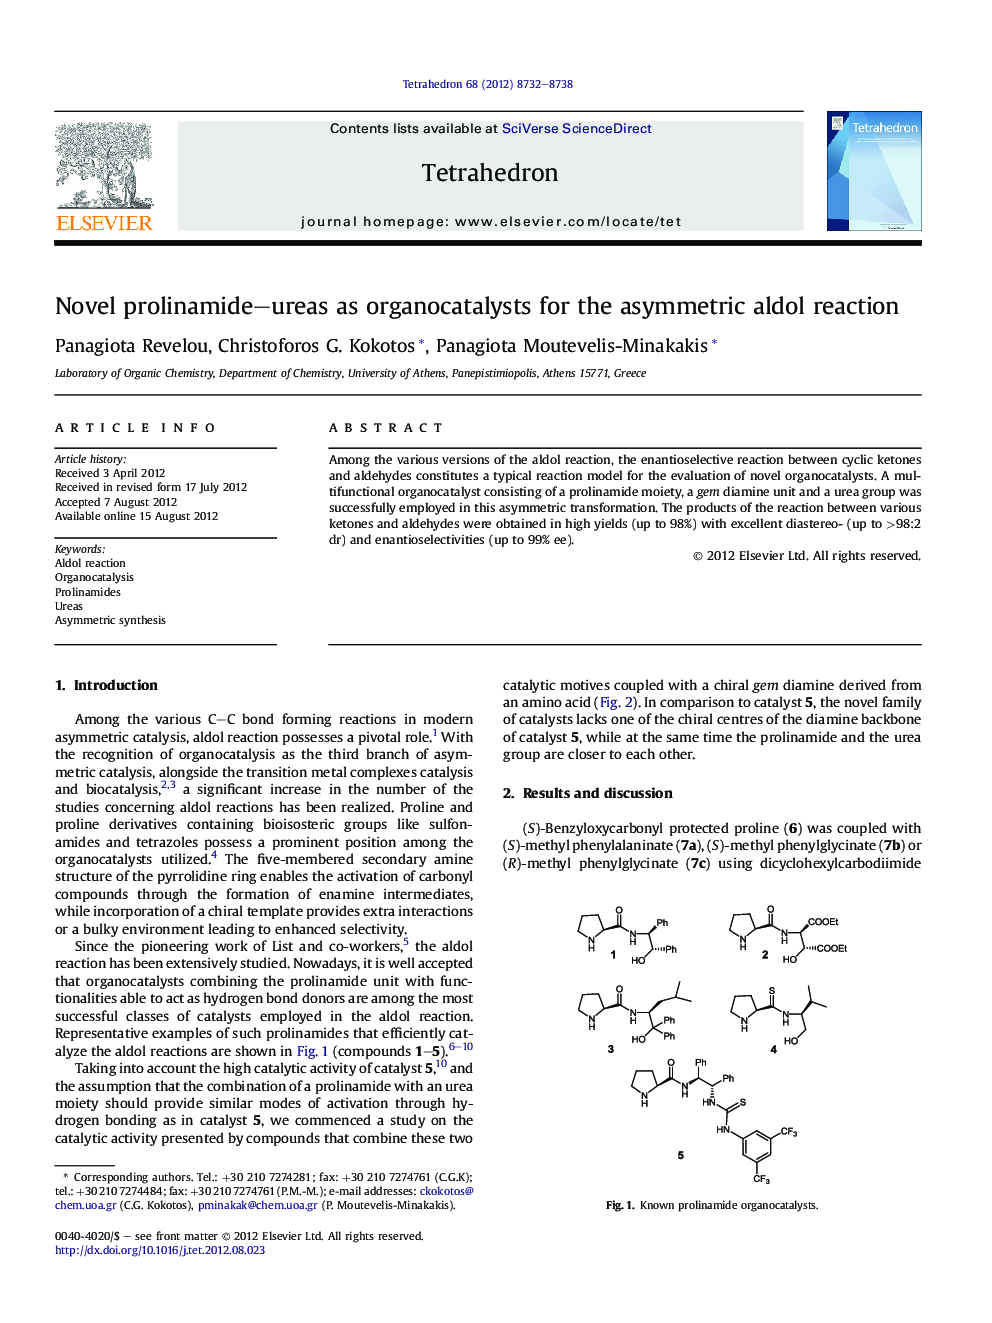 Novel prolinamide-ureas as organocatalysts for the asymmetric aldol reaction